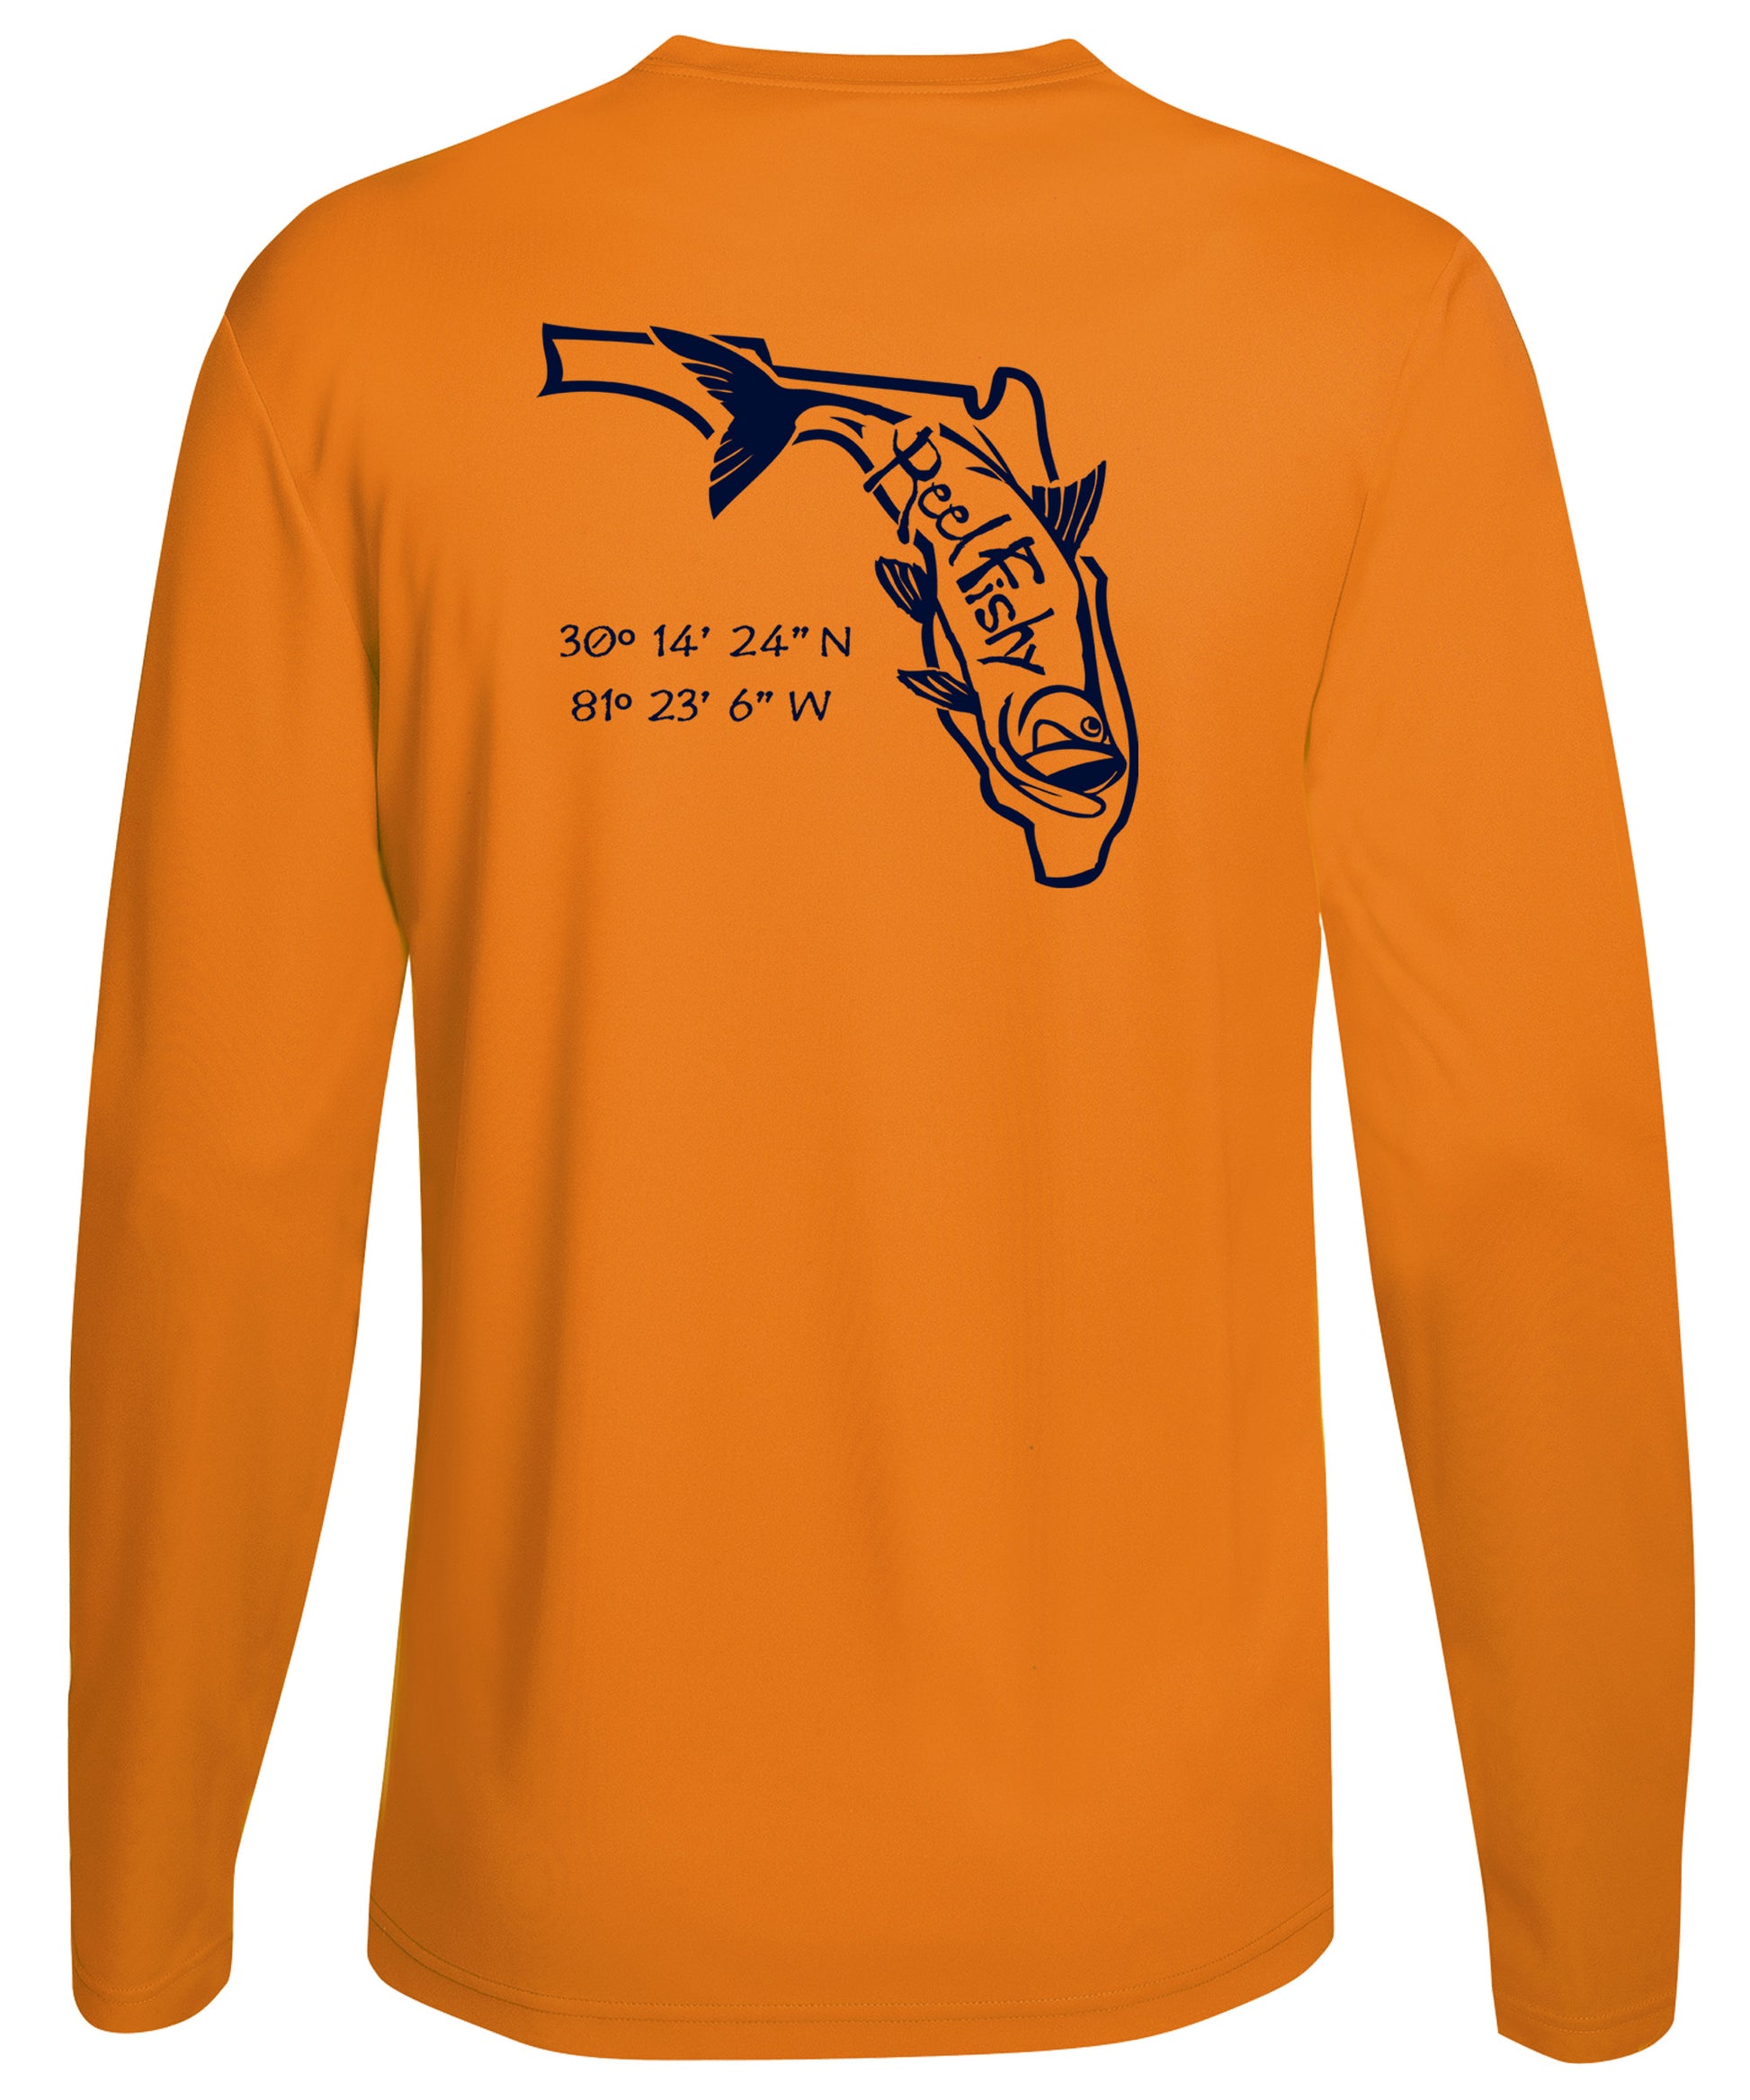 Neon Orange/Navy Tarpon State of FL Performance Shirts 50+UV Sun Protection Long Sleeves